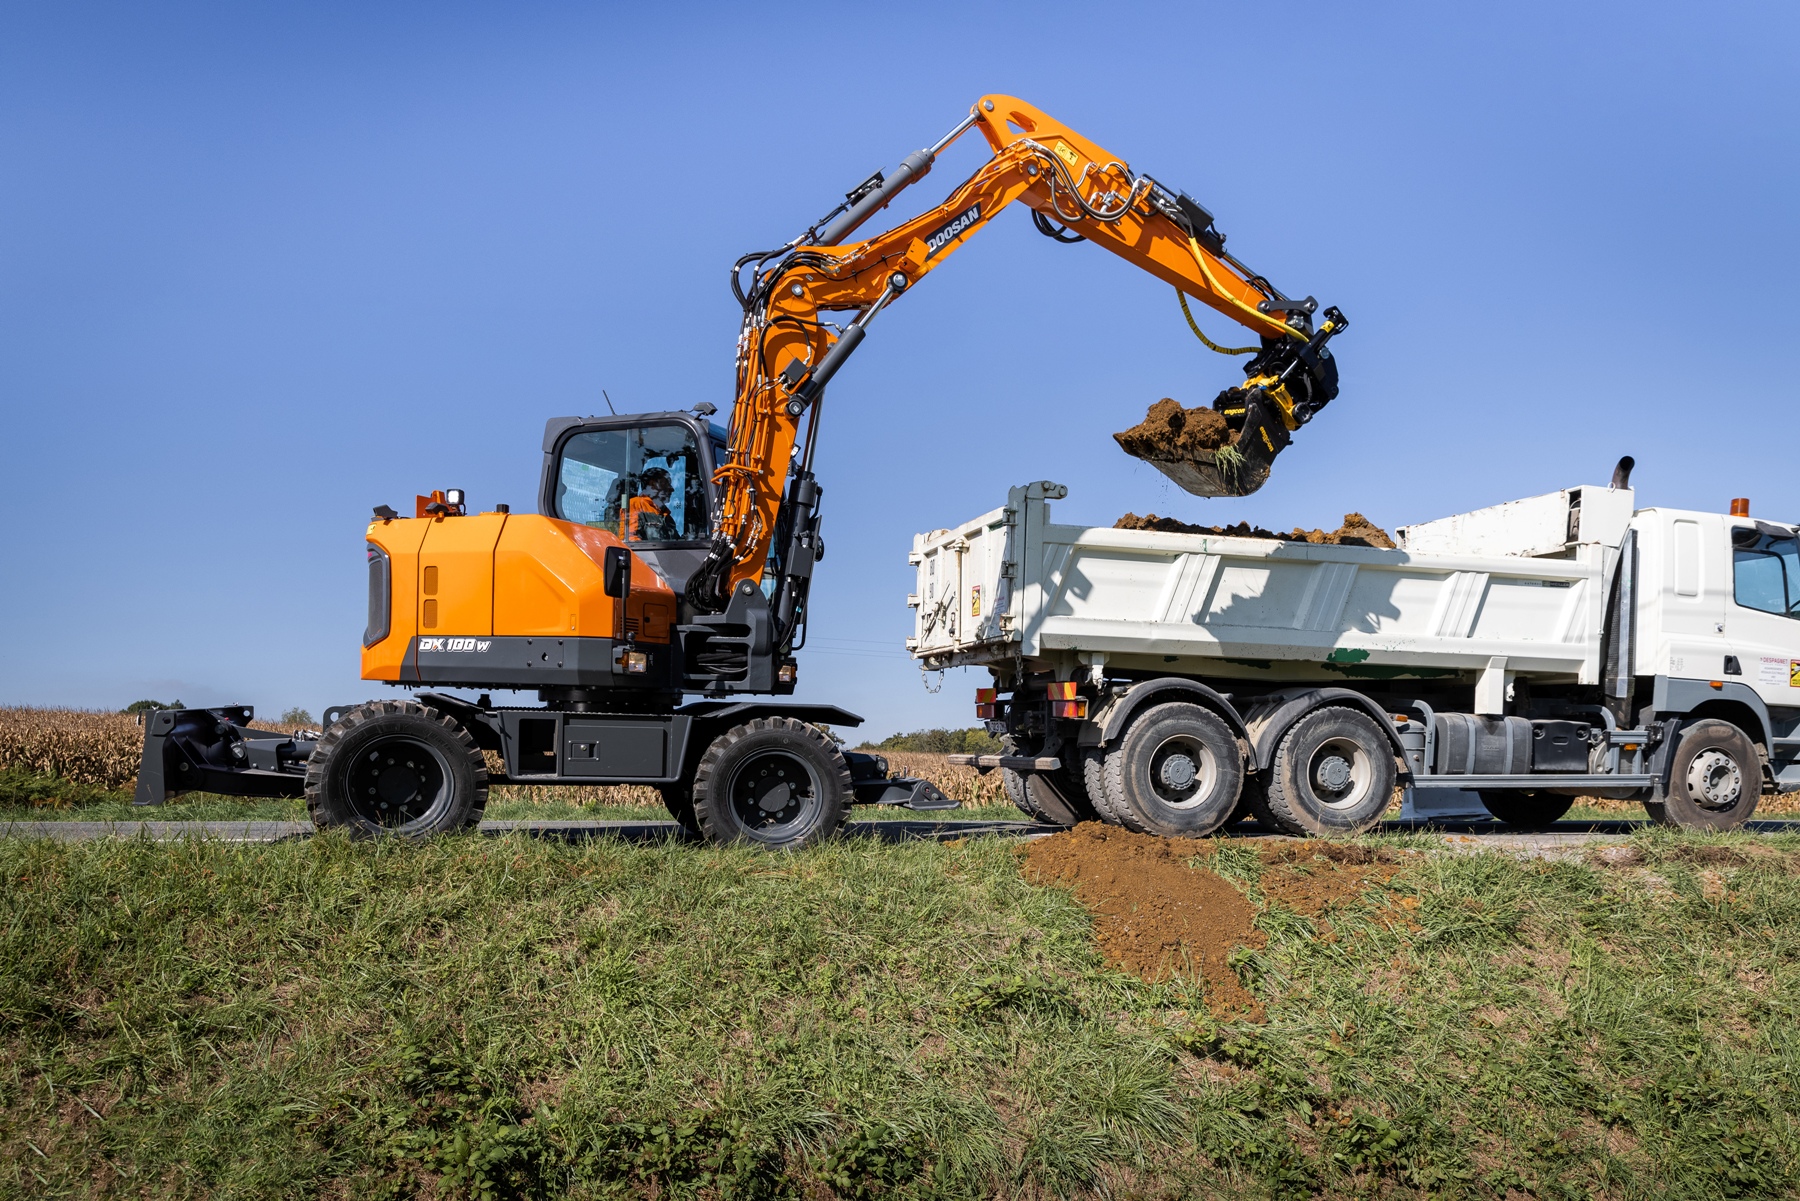 Doosan launches DX100W-7 wheeled excavator for urban work